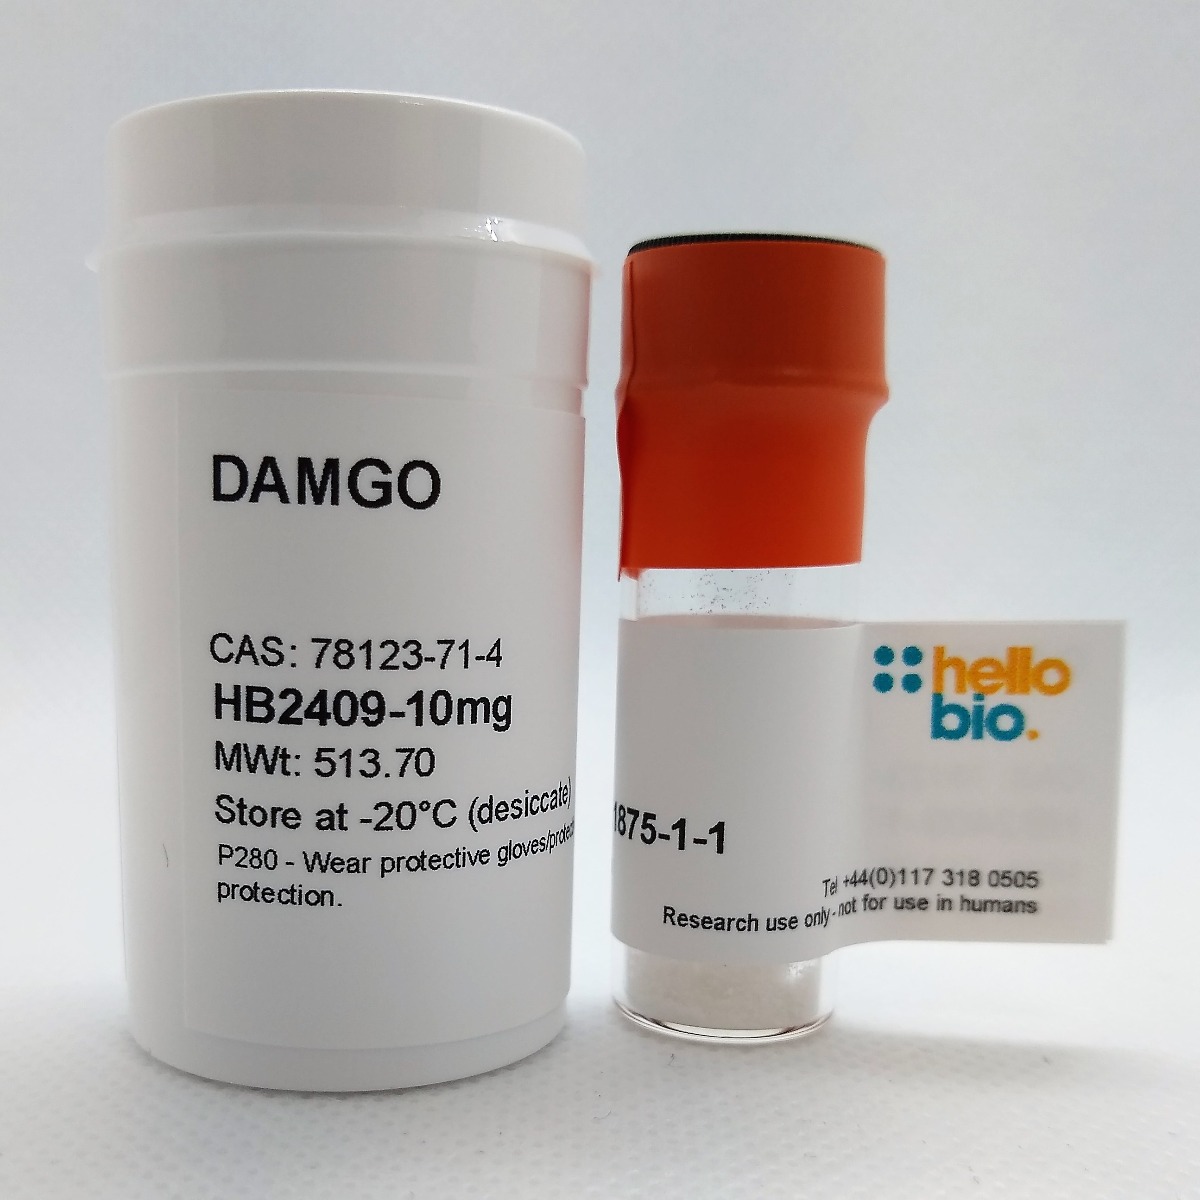 DAMGO product vial image | Hello Bio